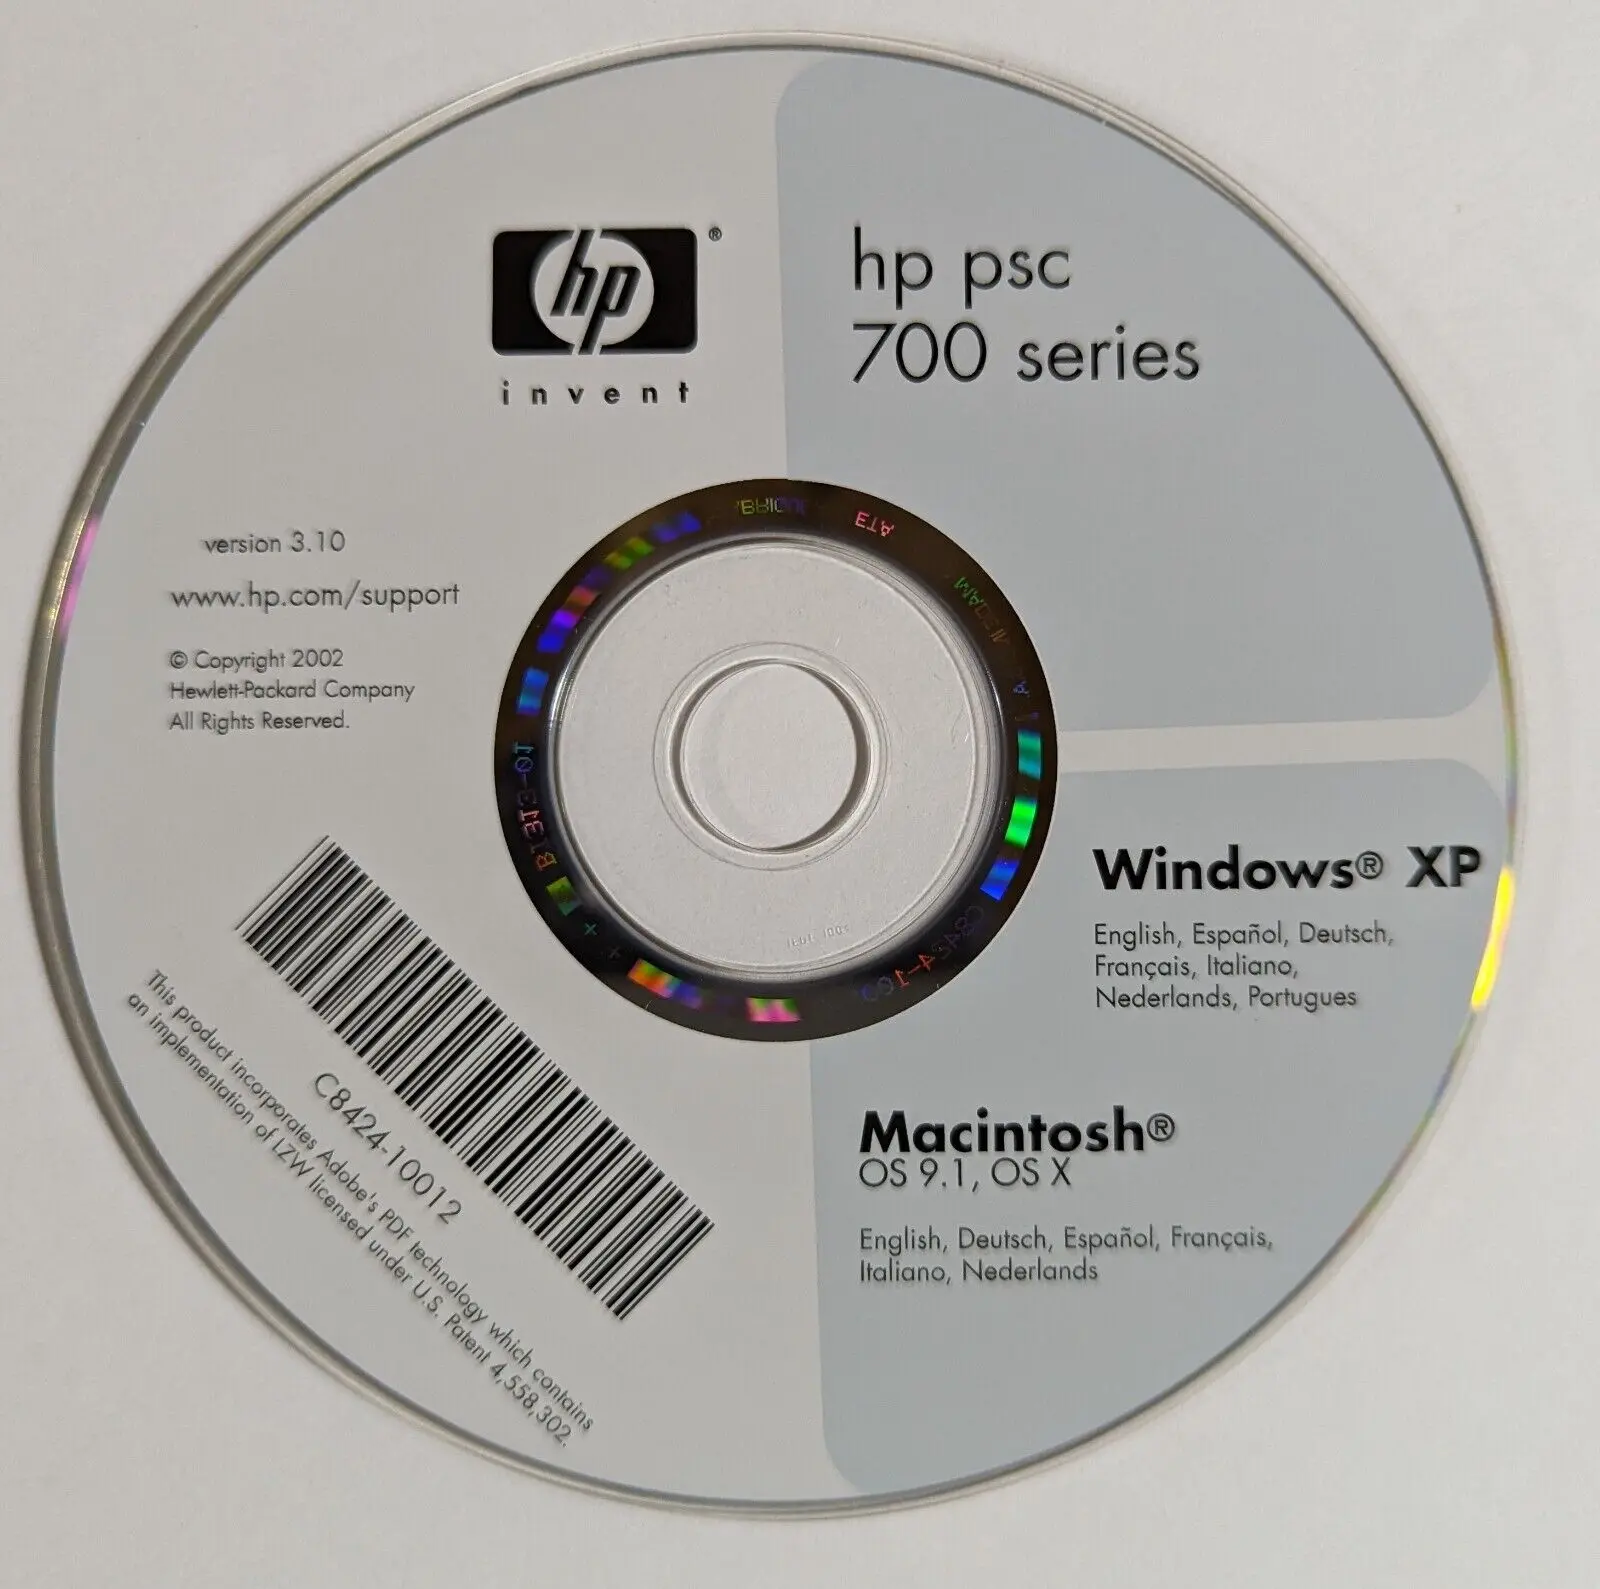 How to create a hewlett packard windows installation disc